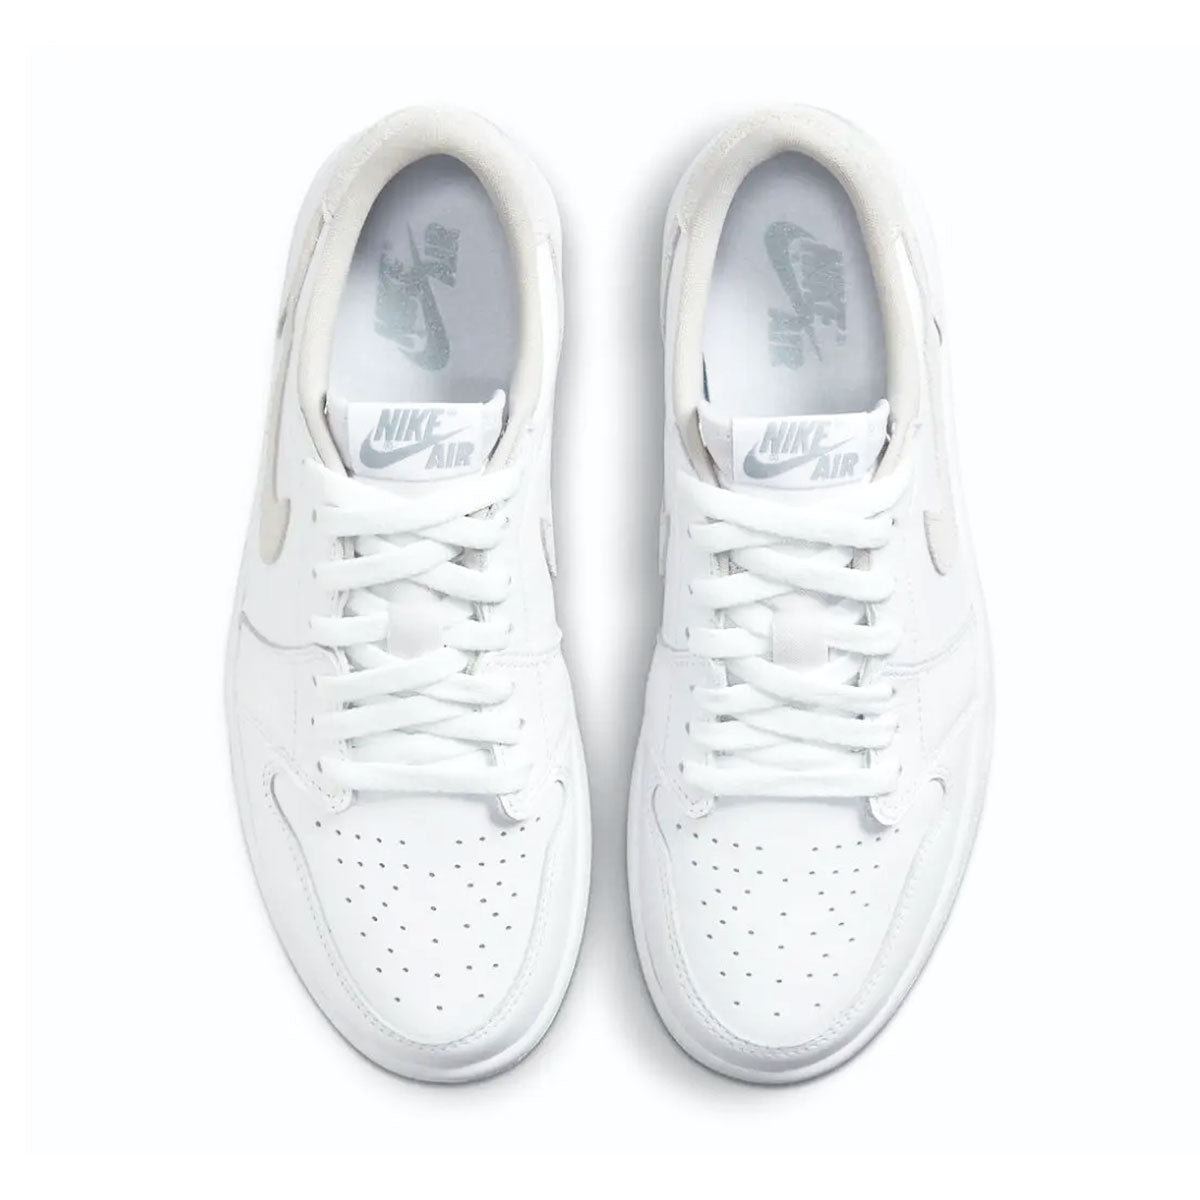 NIKE AIR JORDAN 1 LOW OG (WHITE/PARTICLE GRAY) Nike Air Jordan 1 Low OG "White/Gray" [cz0790-100]